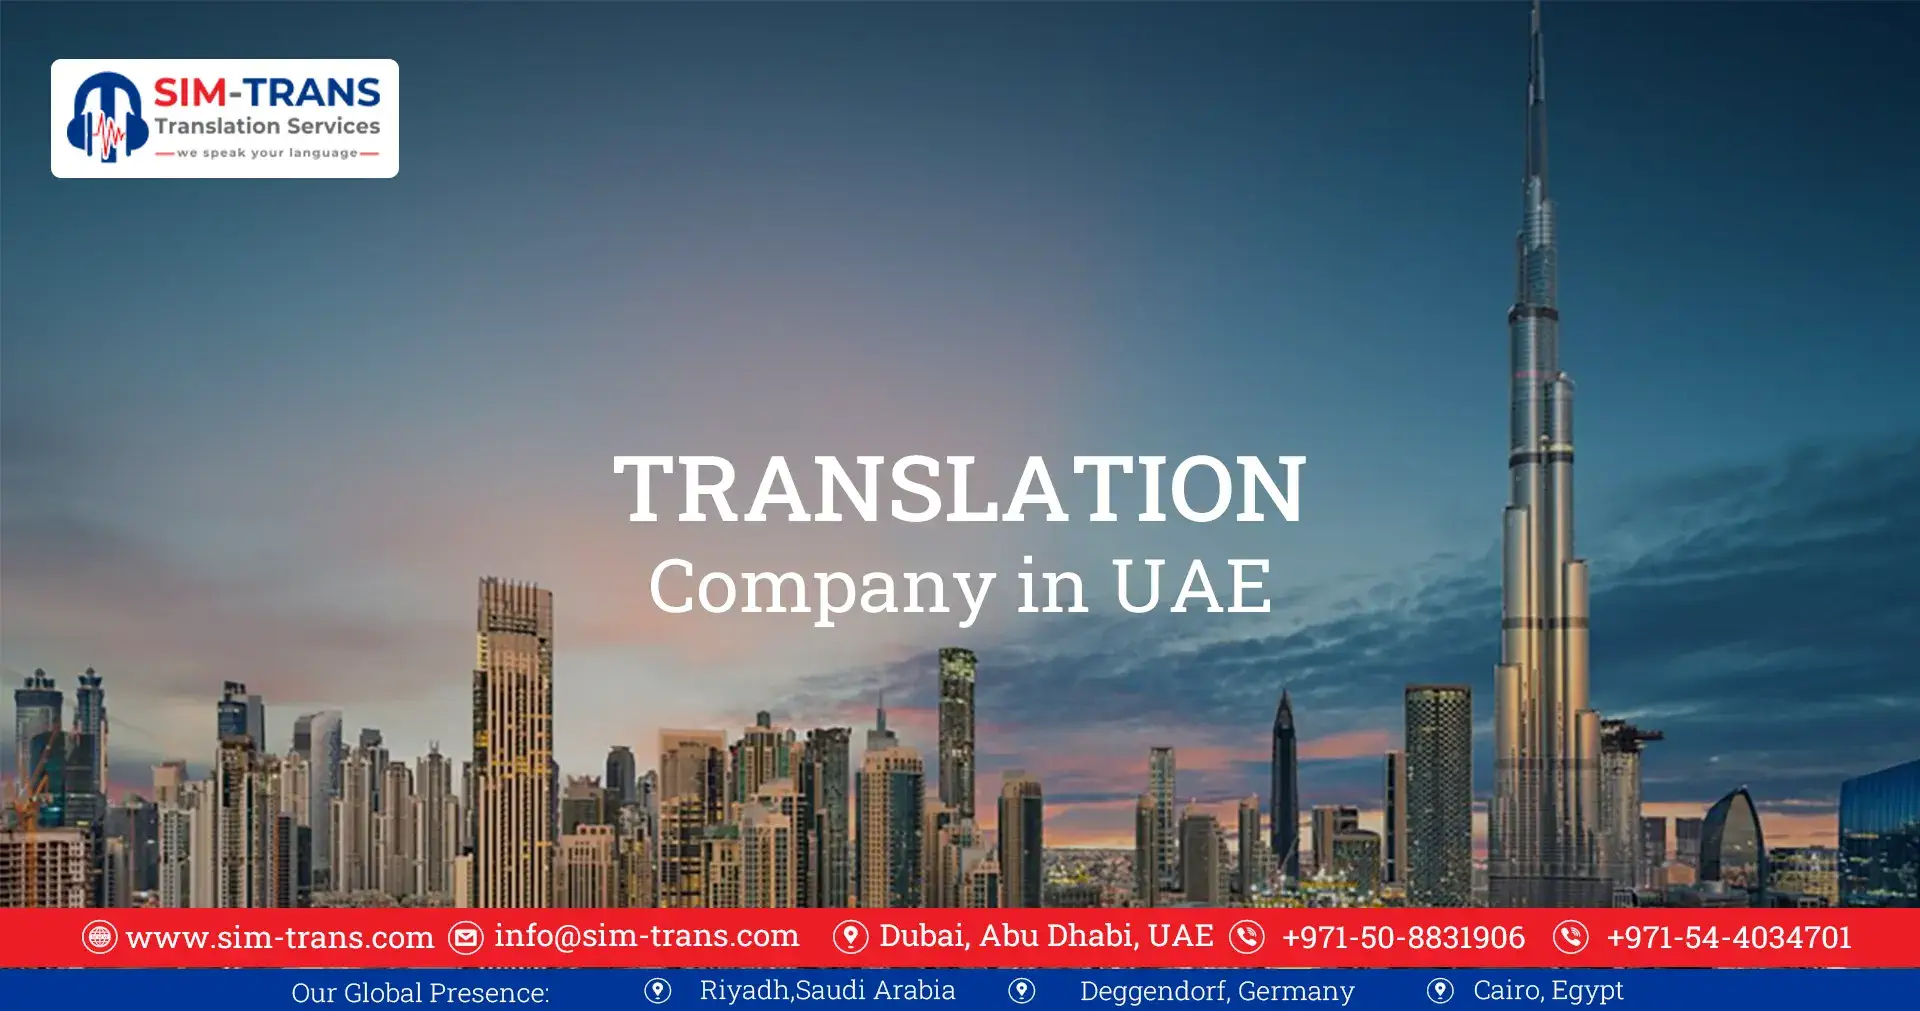 Unlock Global Opportunities with Sim-trans, Dubai’s Premier Translation Company